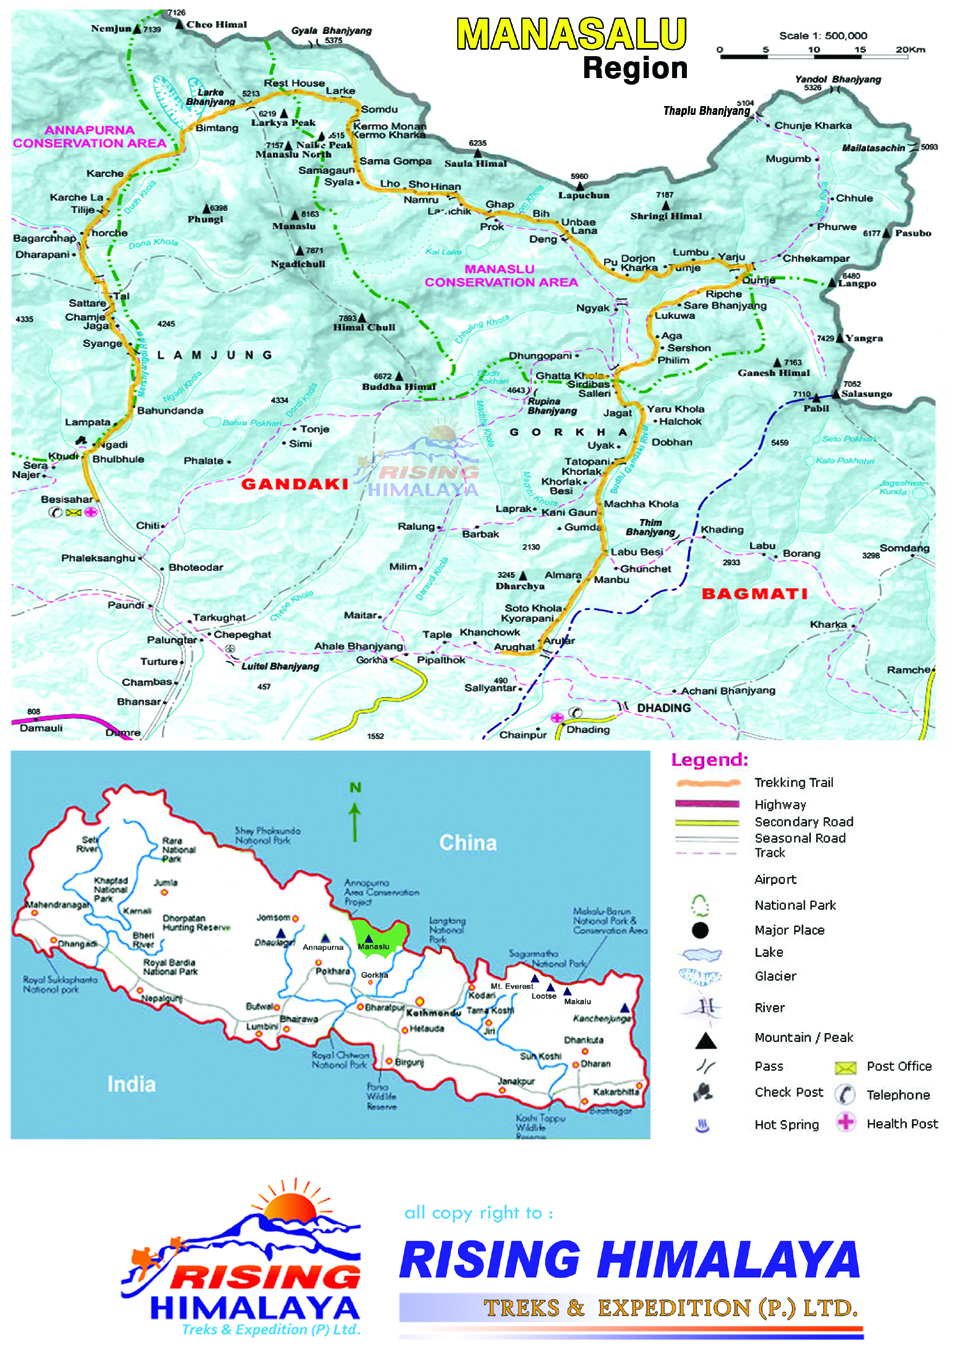 Manasalu Region Map-Rising Himalaya Treks & expd